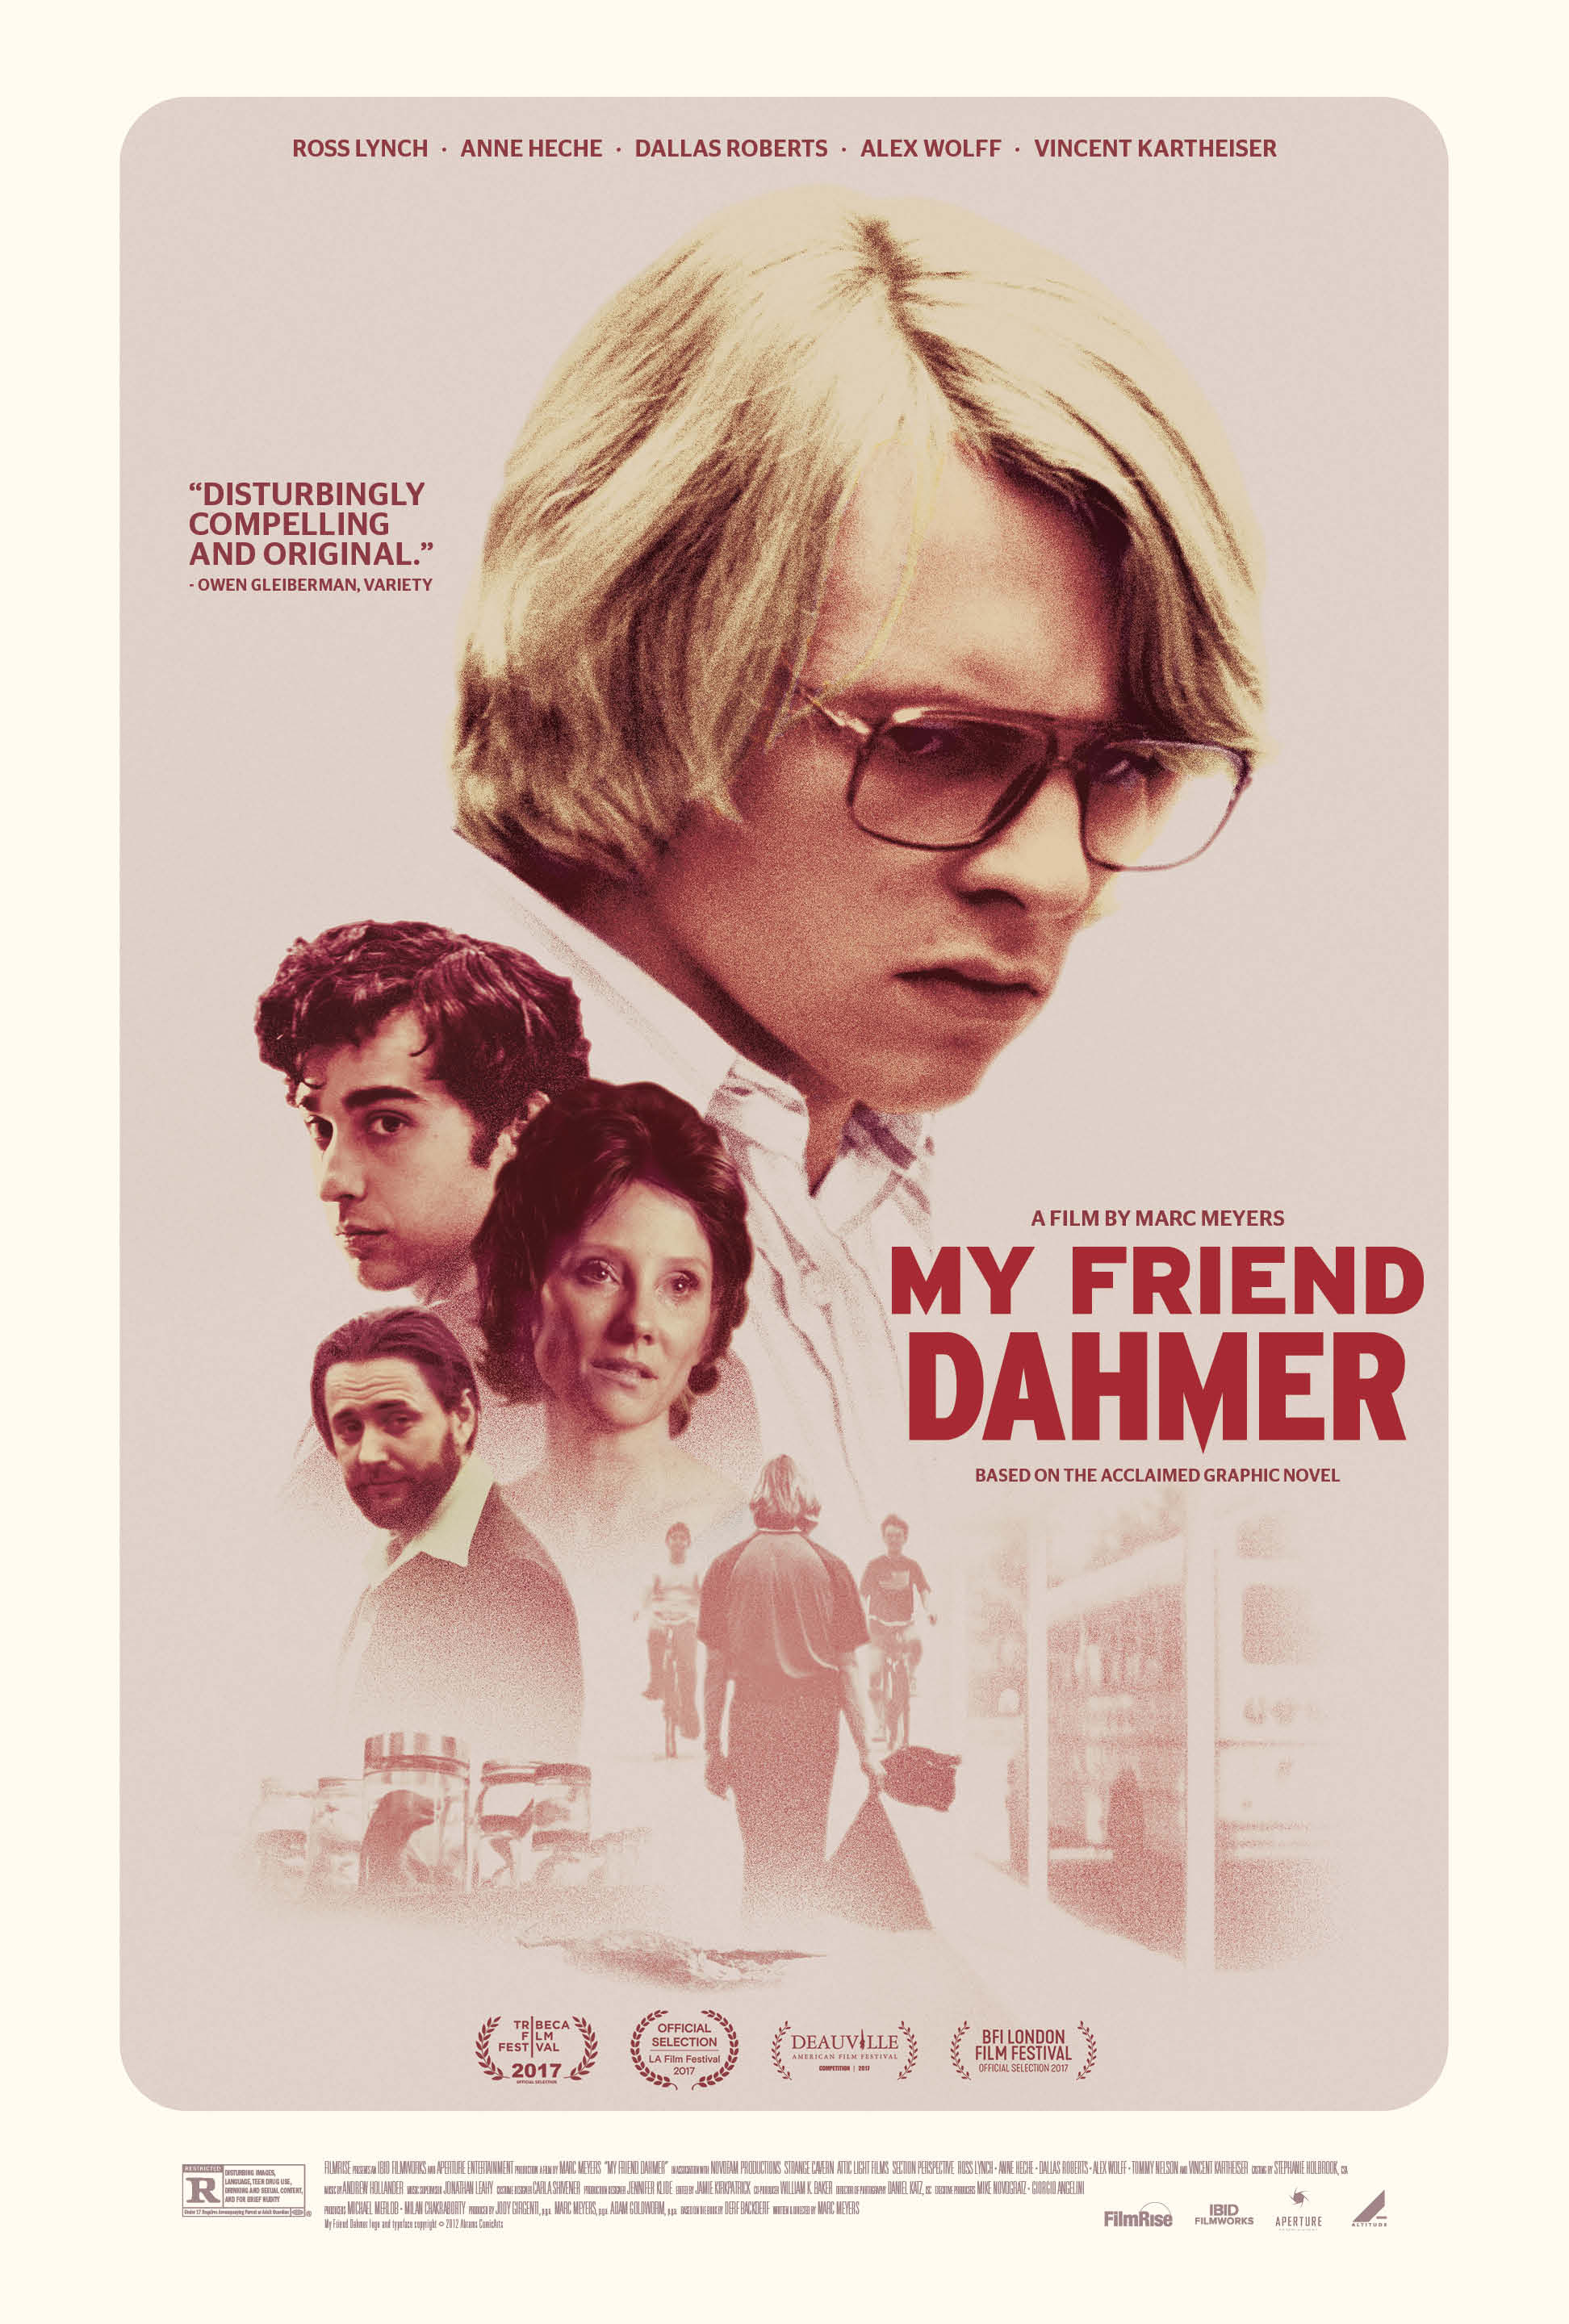 Nonton film My Friend Dahmer layarkaca21 indoxx1 ganool online streaming terbaru